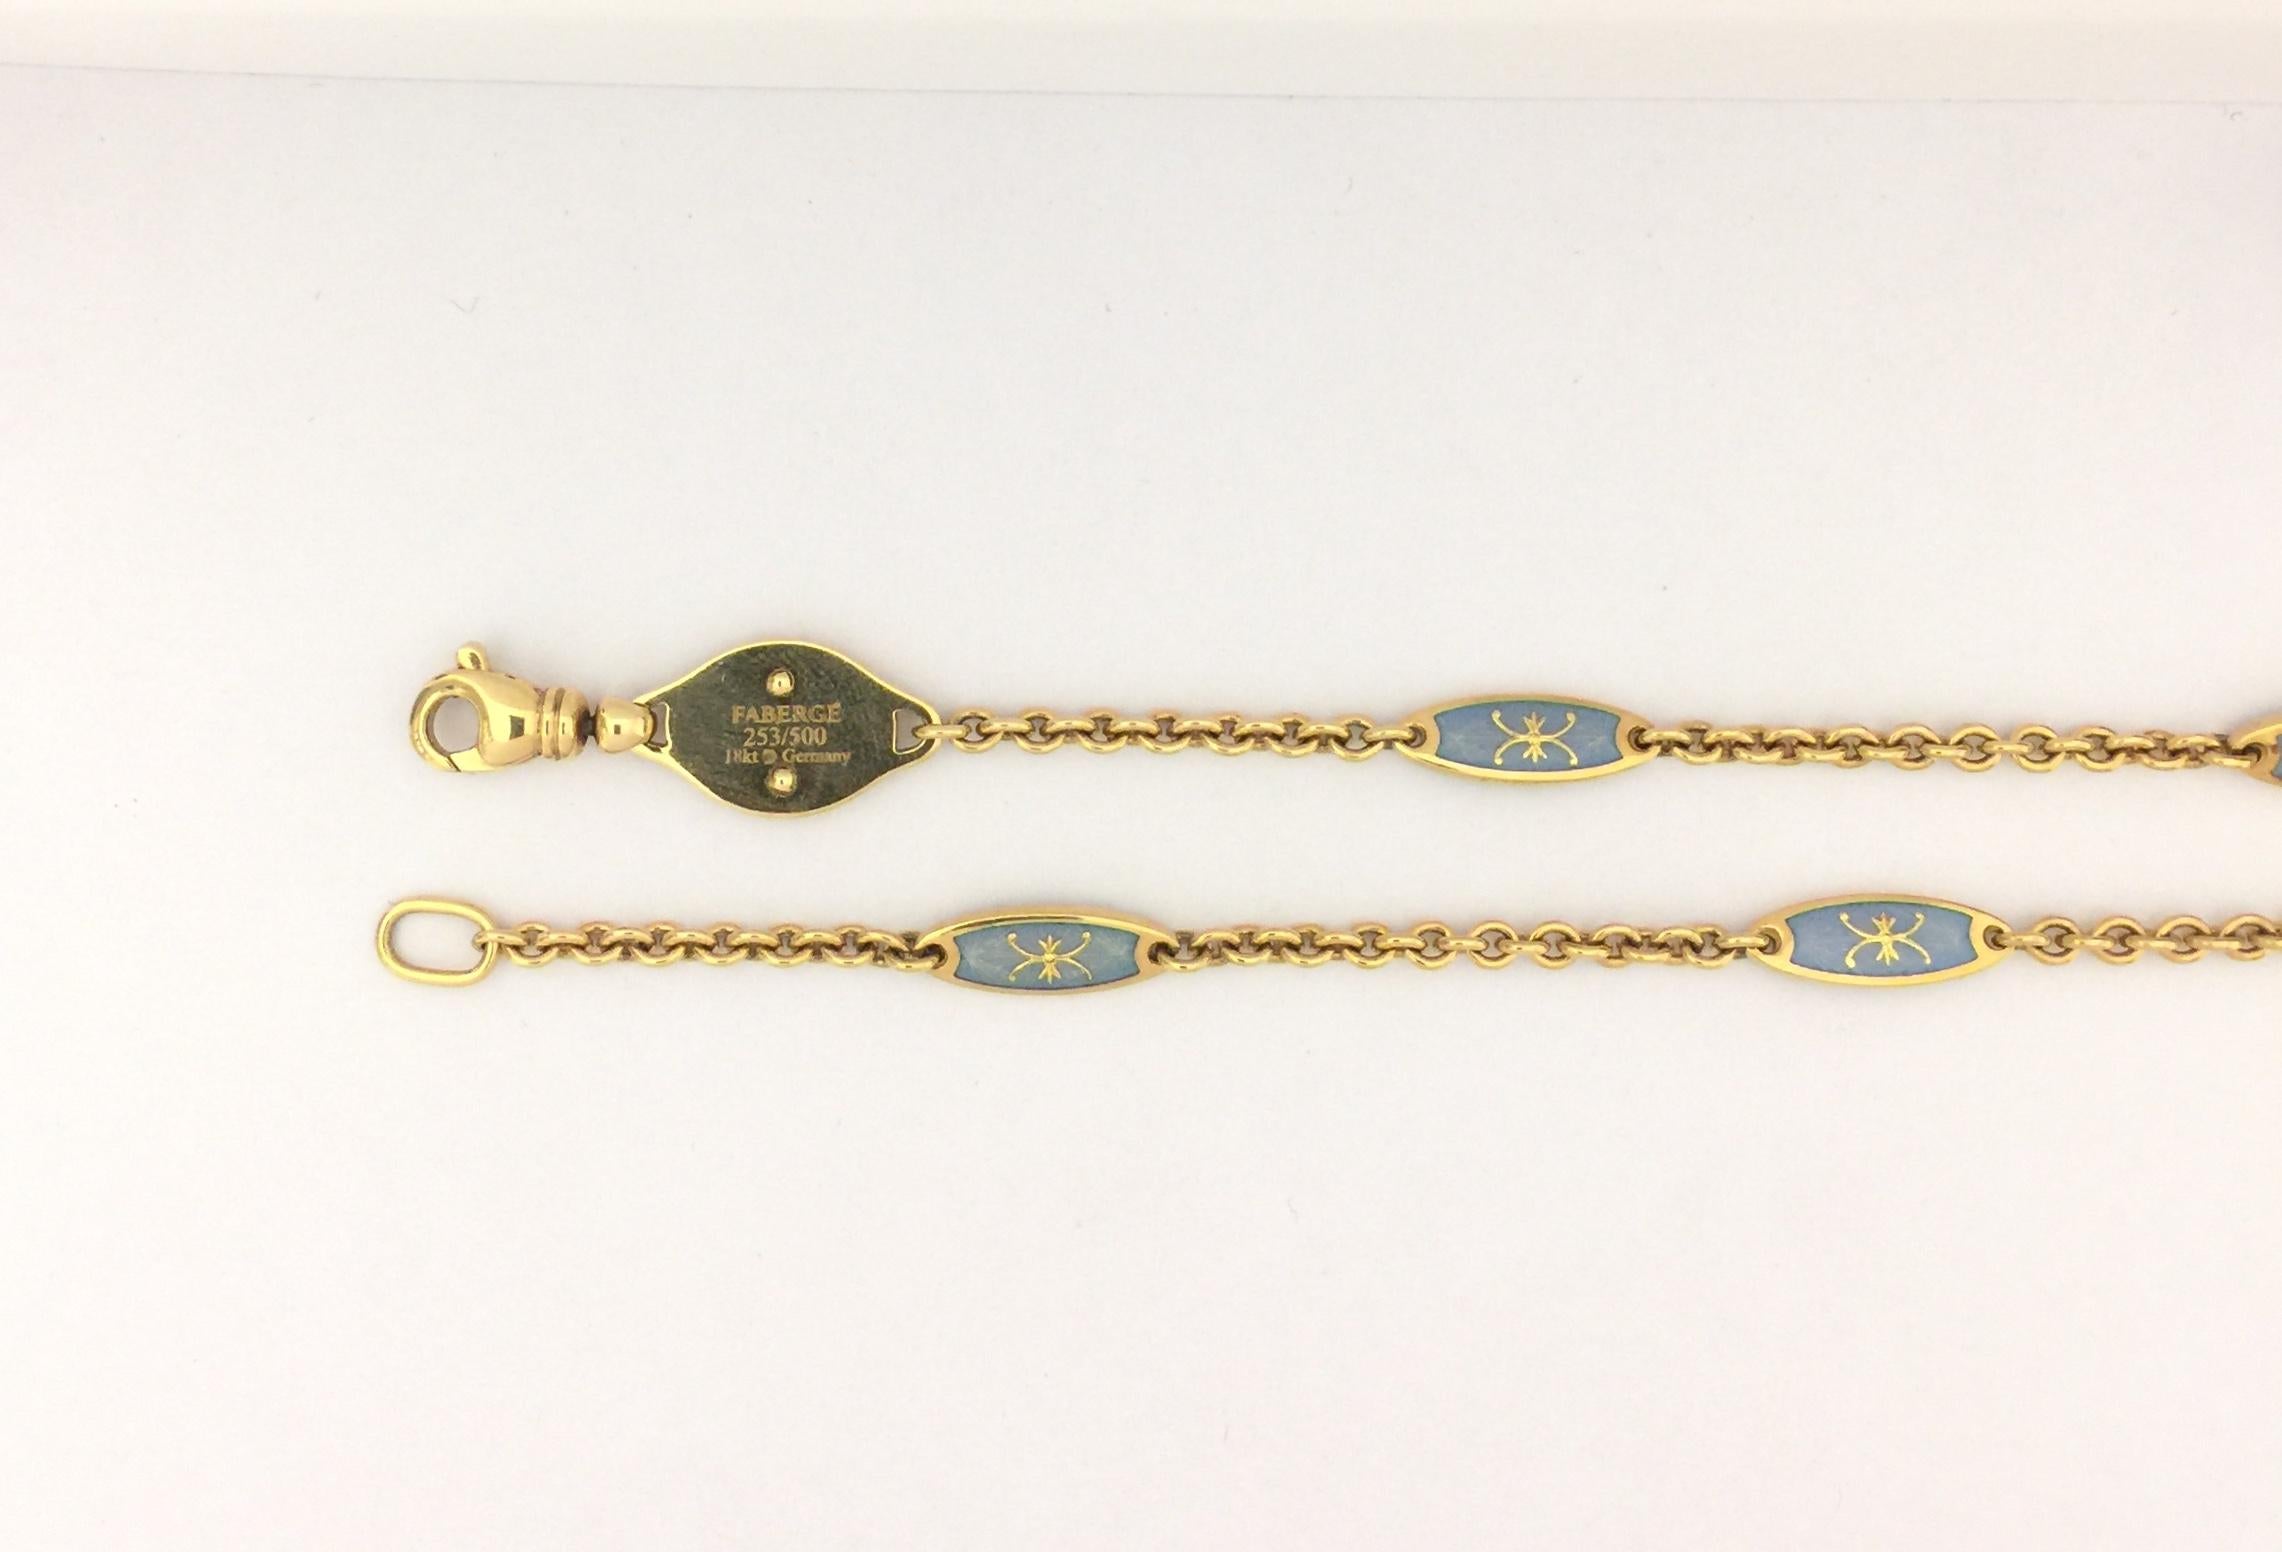 Faberge Enamel Station Necklace.
18k Yellow Gold 
Enamel
Length 18 inches
F1543OB